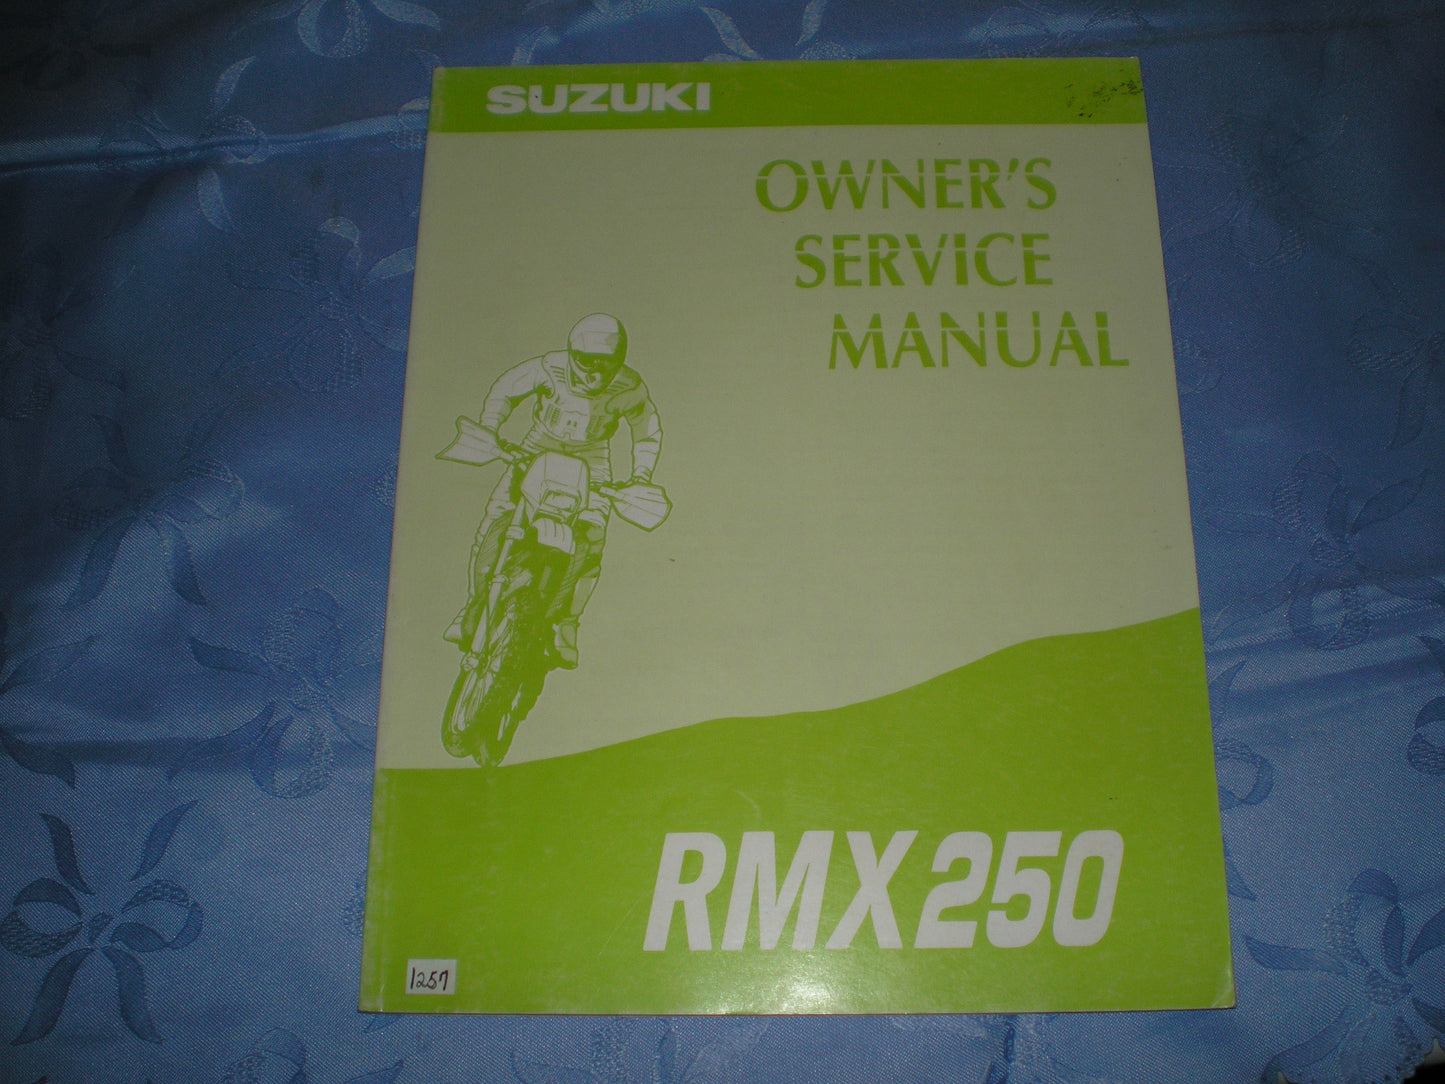 SUZUKI RMX250 1994  Owner's Service Manual  99011-05D55-01A  #1257